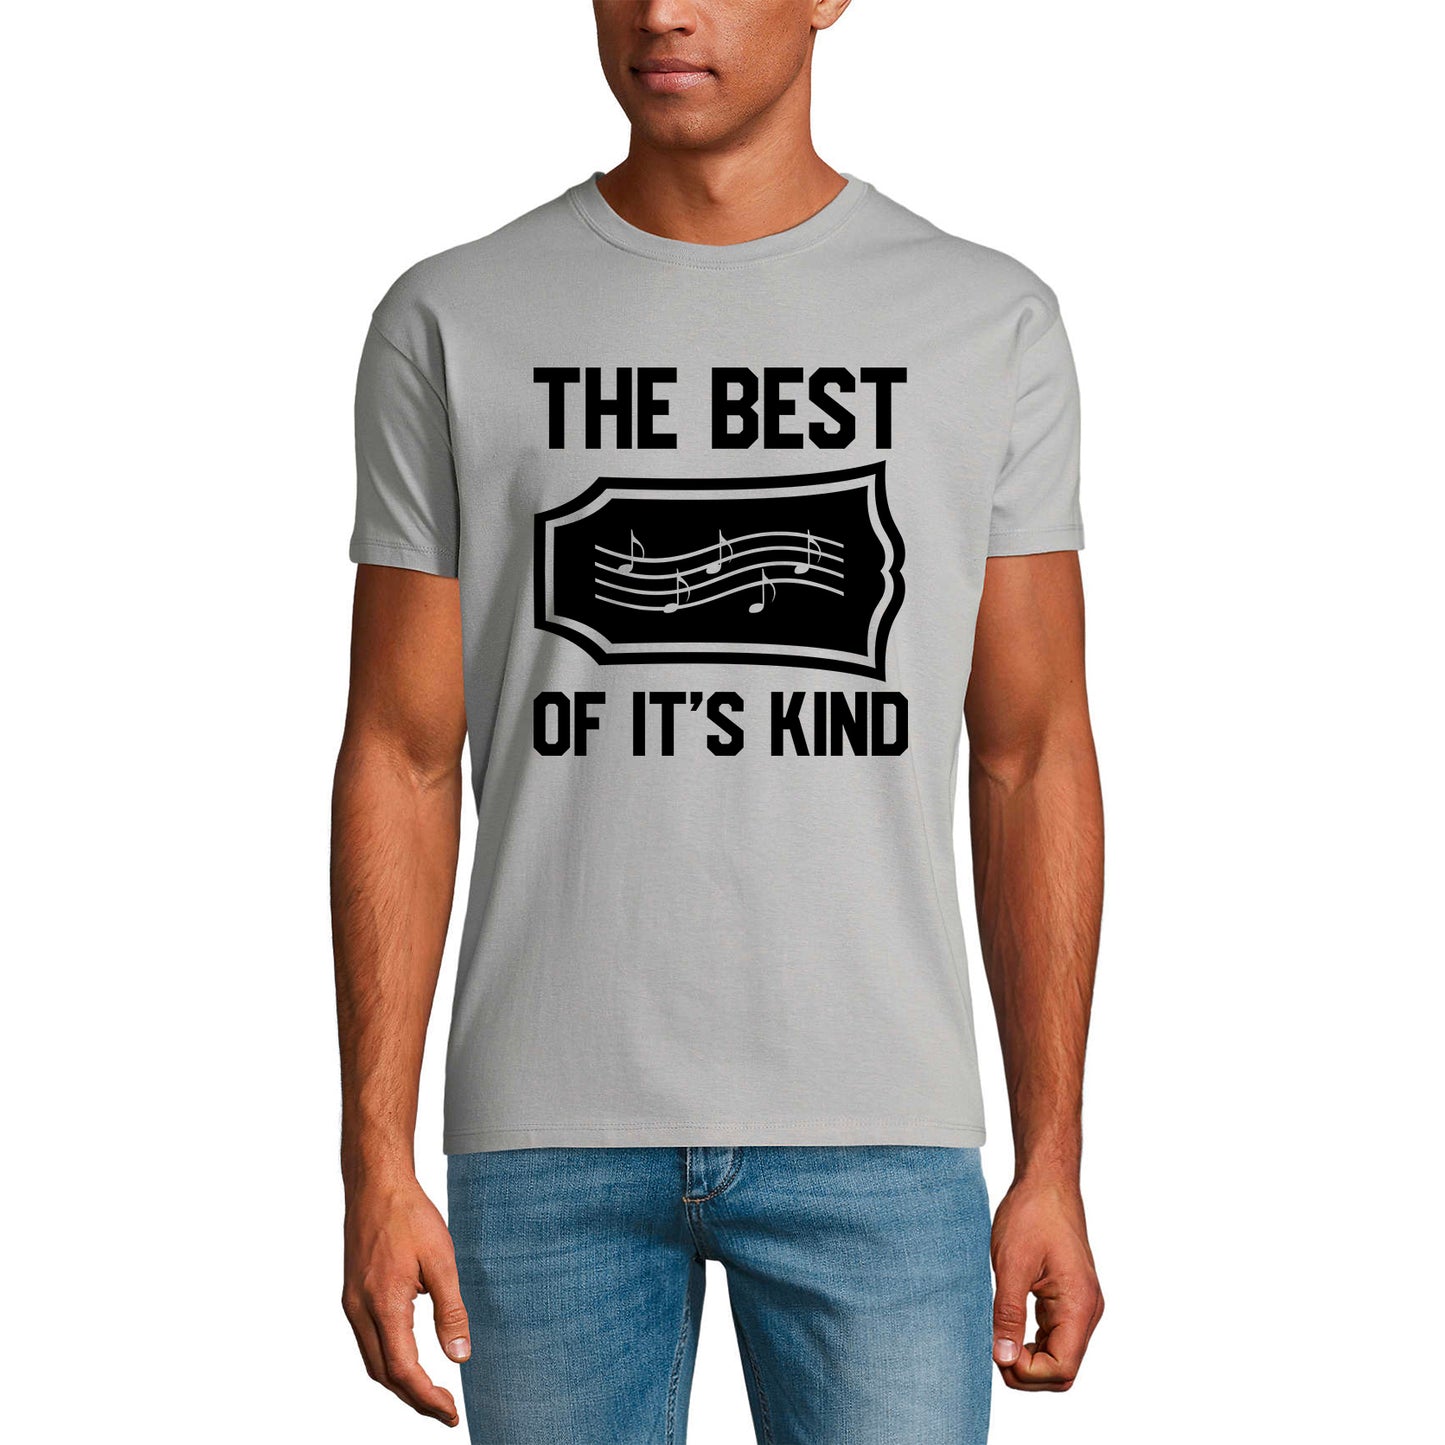 ULTRABASIC Men's Graphic T-Shirt The Best of It's Kind - Shirt for Musician